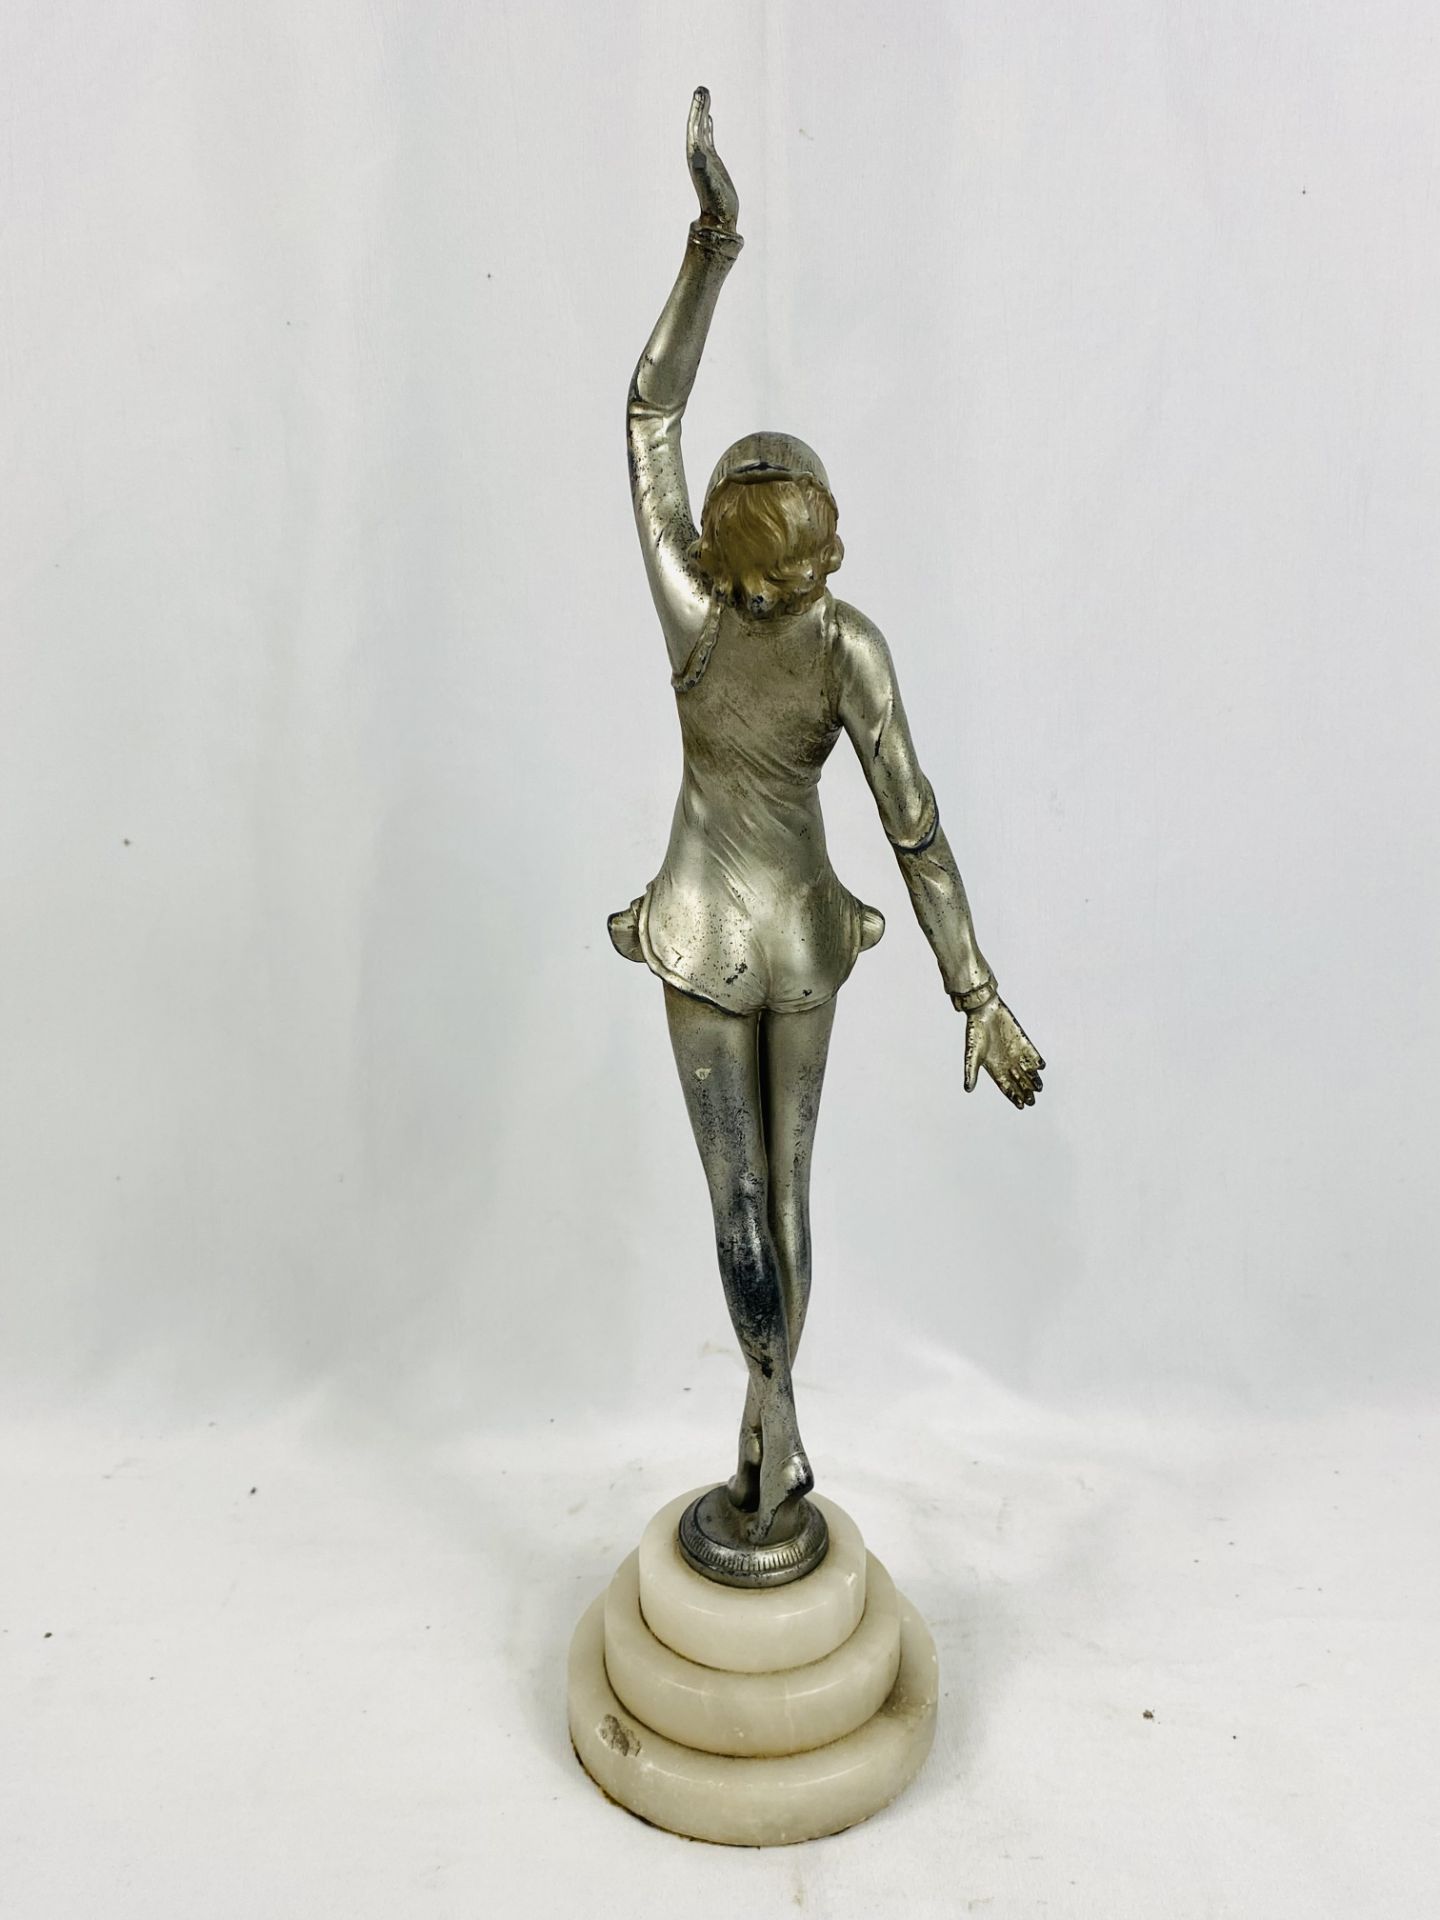 Art deco style figurine - Image 2 of 3